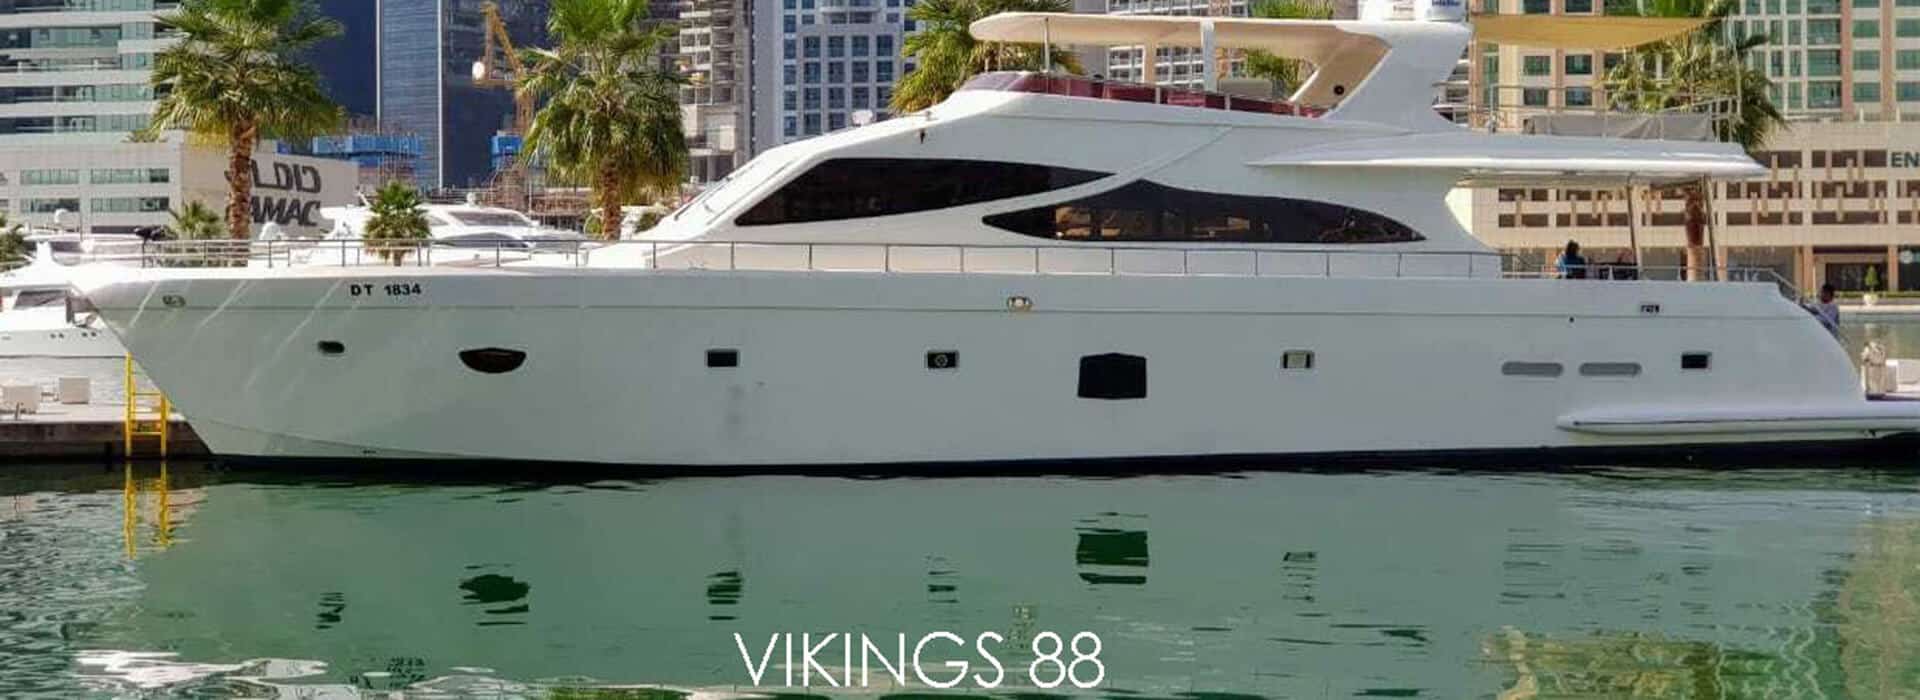 viking 88 yacht